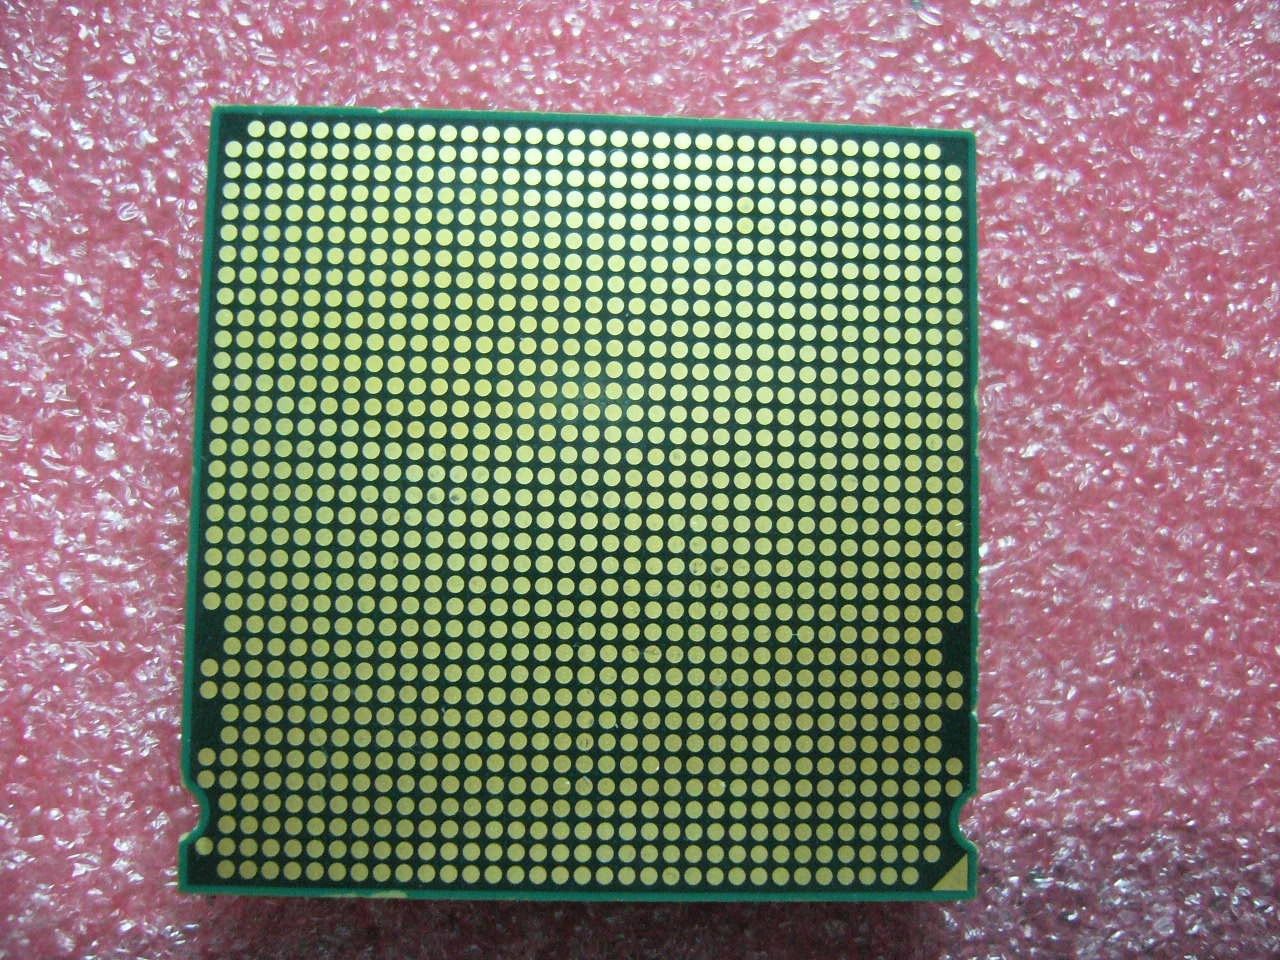 QTY 1x AMD Opteron 4170 HE 2.1 GHz Six Core (OS4170OFU6DGO) CPU Socket C32 - Click Image to Close